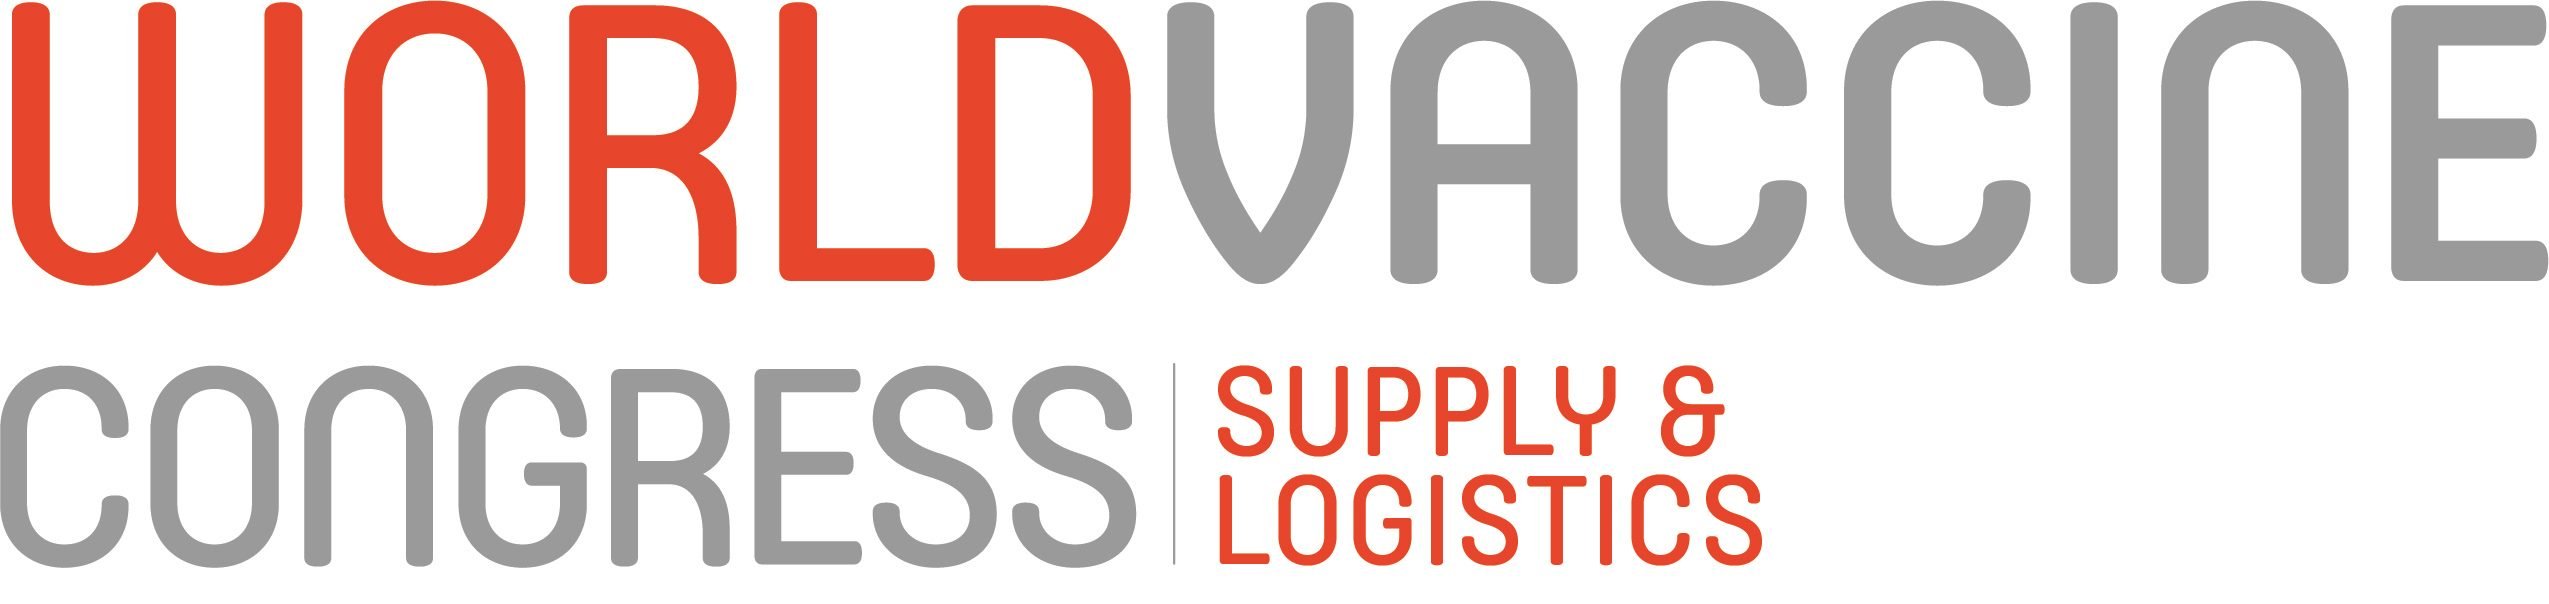 Supply & Logistics